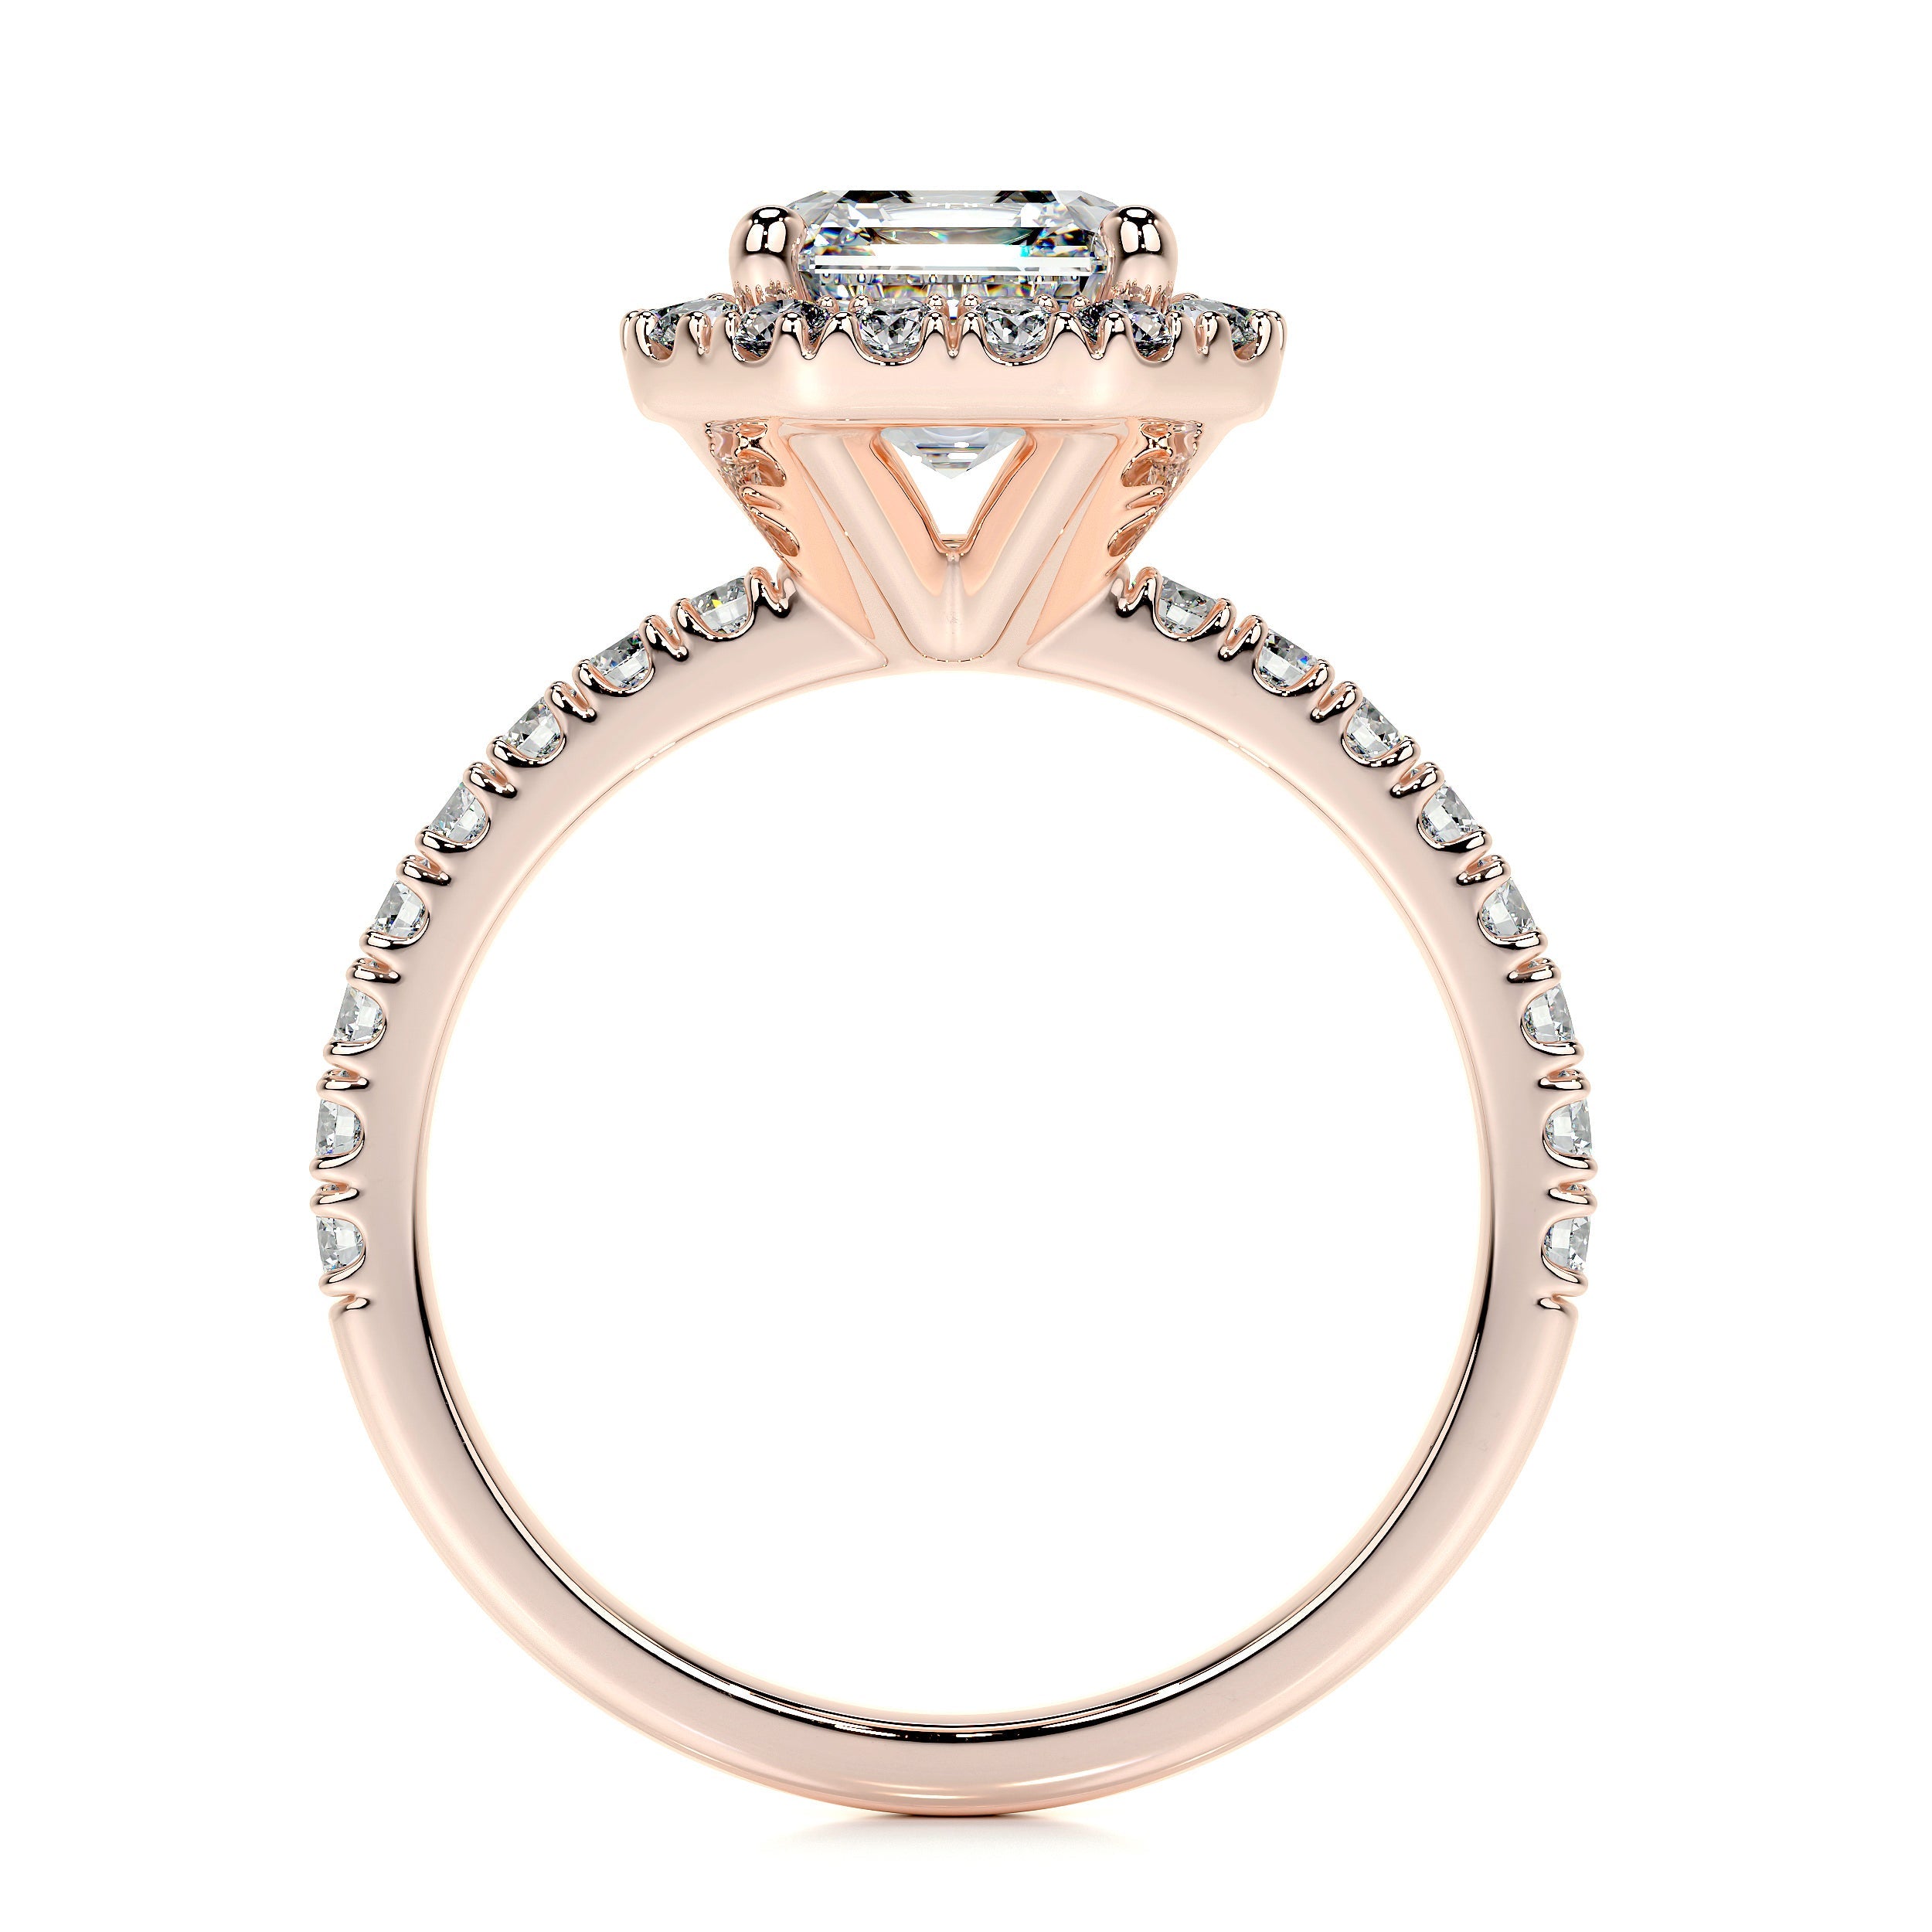 Brooklyn Lab Grown Diamond Ring   (2 Carat) -14K Rose Gold